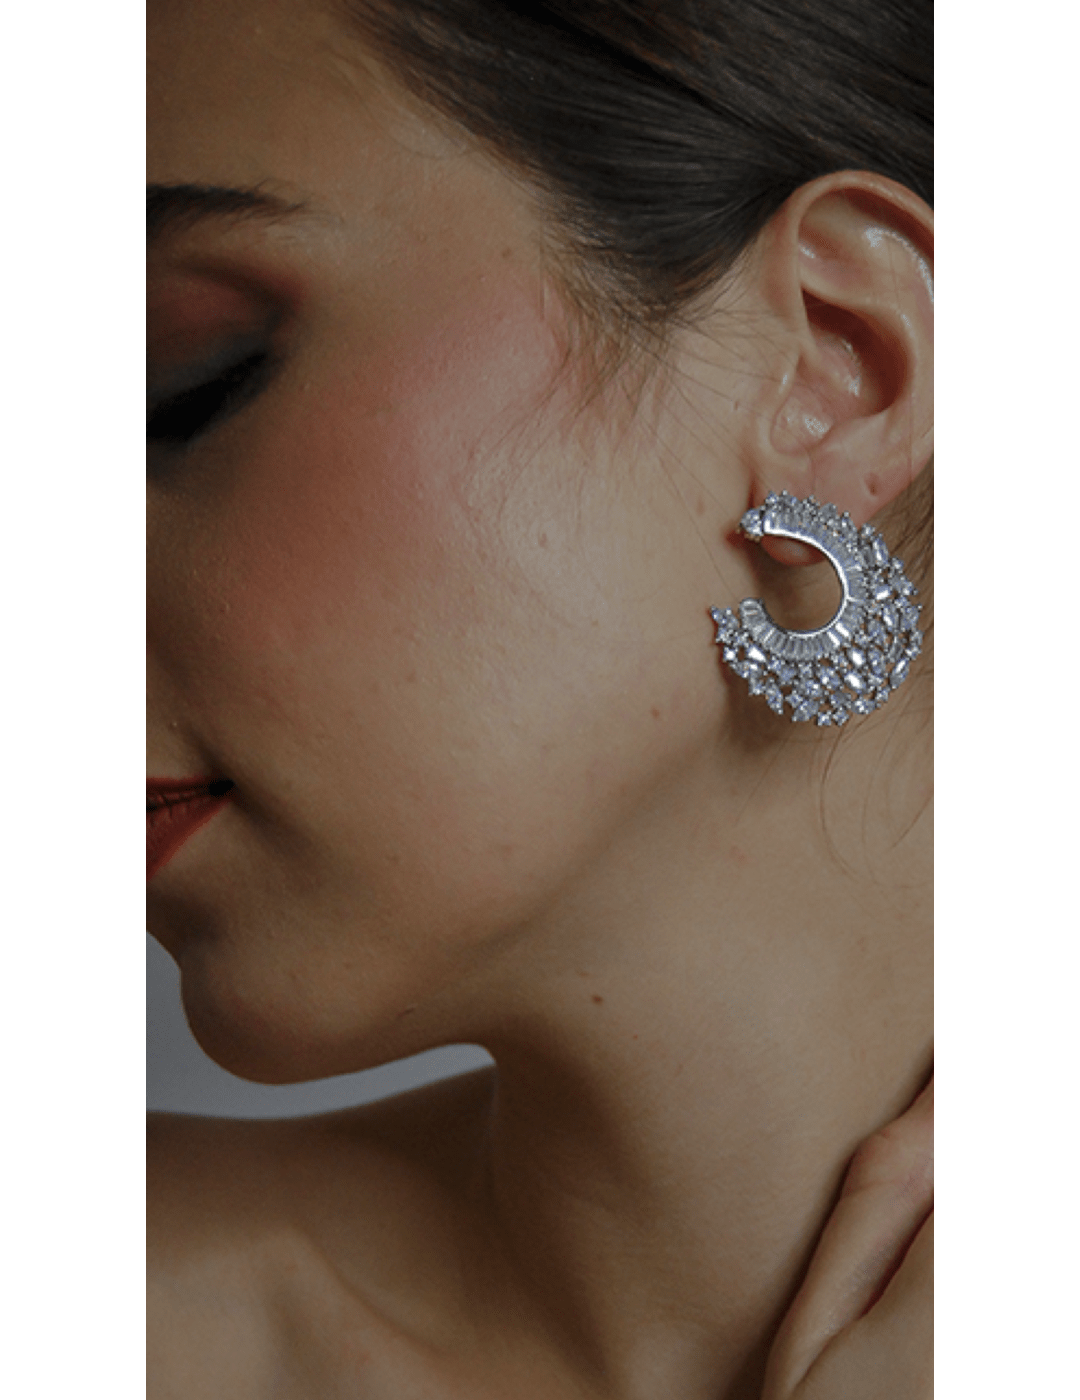 Paved Petal Diamond Earrings